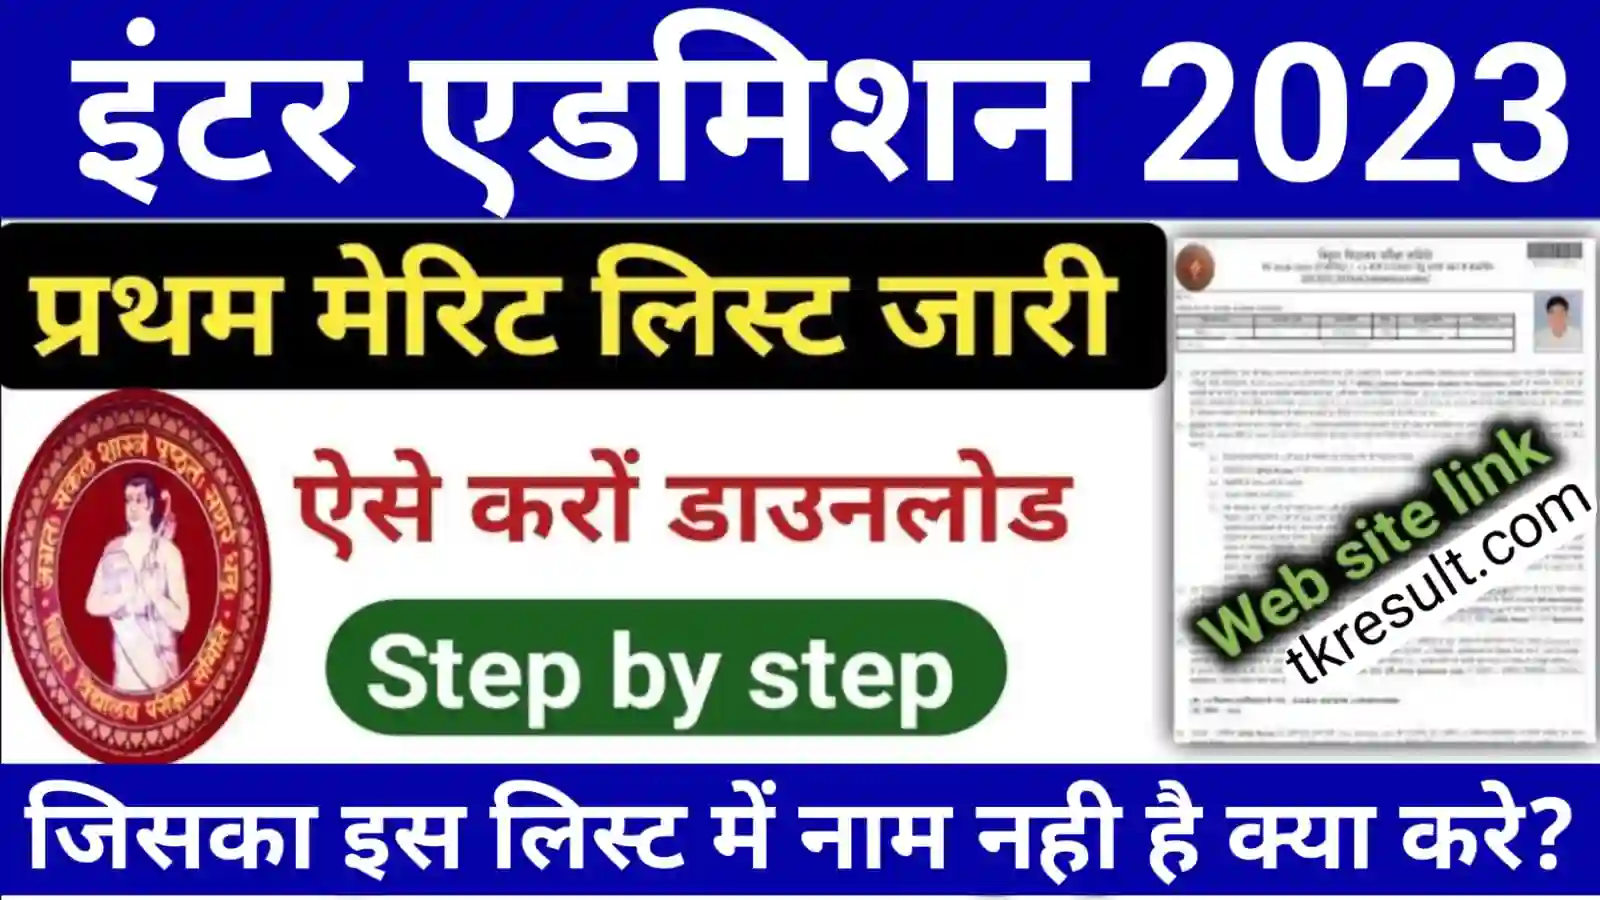 Bihar Board Inter Admission 1st Merit List 2023